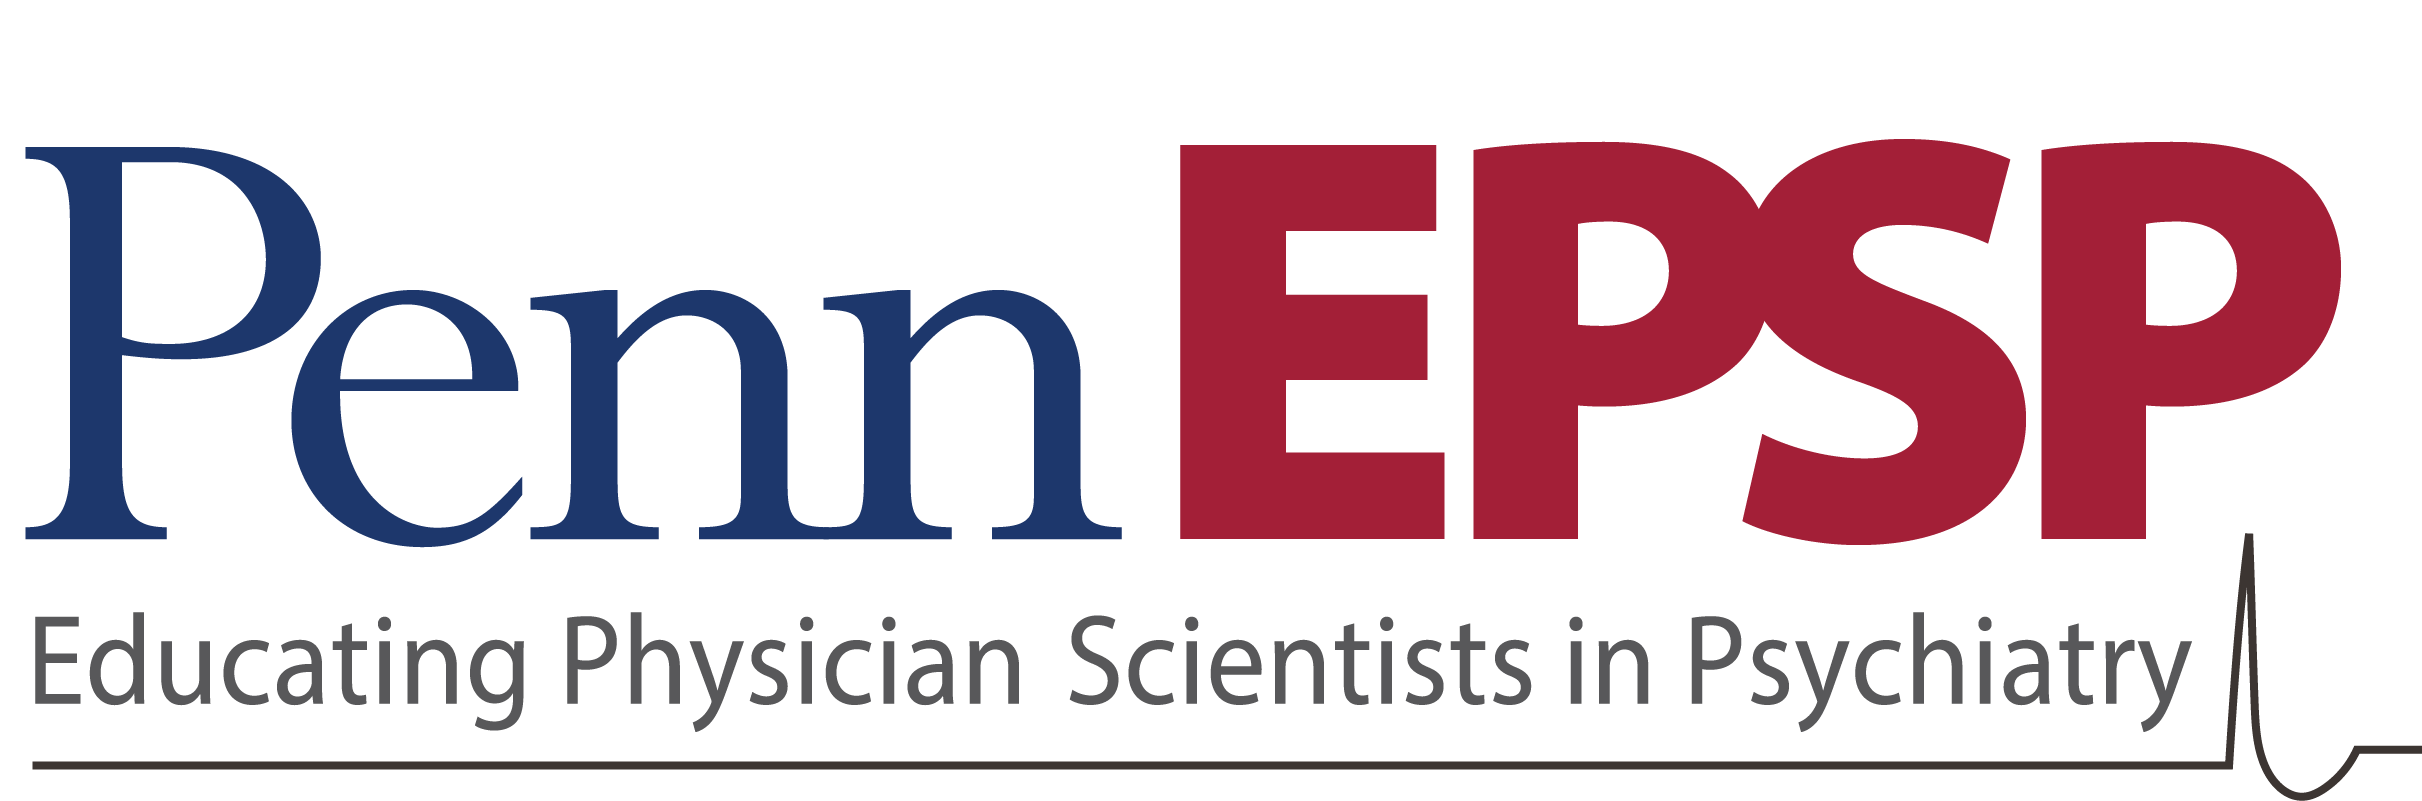 Penn Research Track EPSP